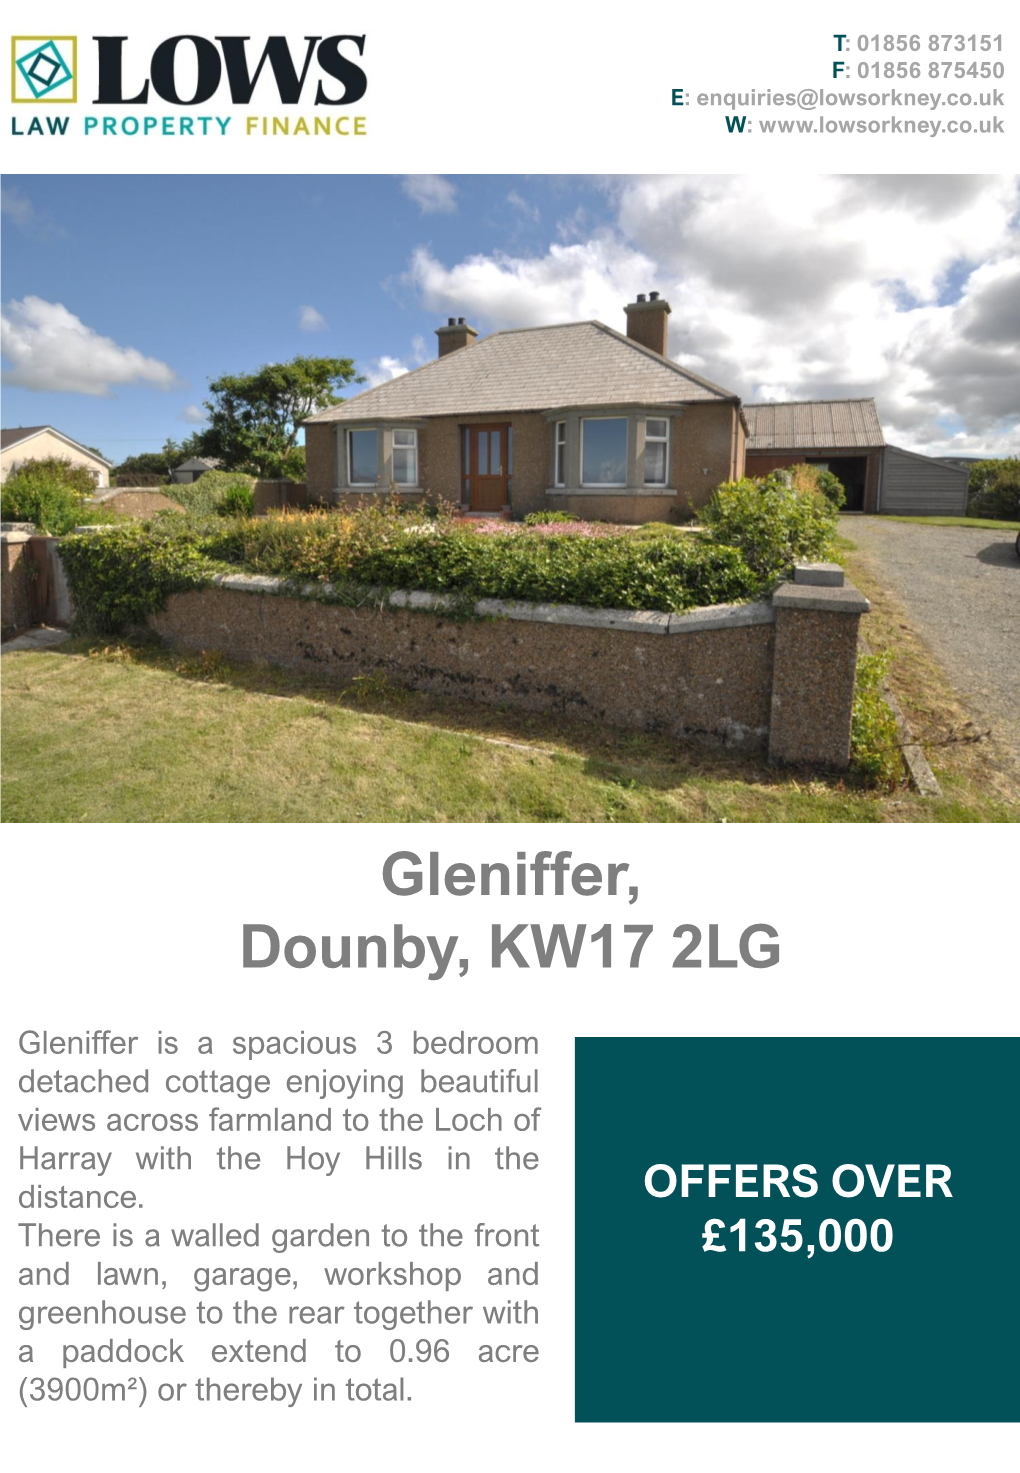 Gleniffer, Dounby, KW17 2LG